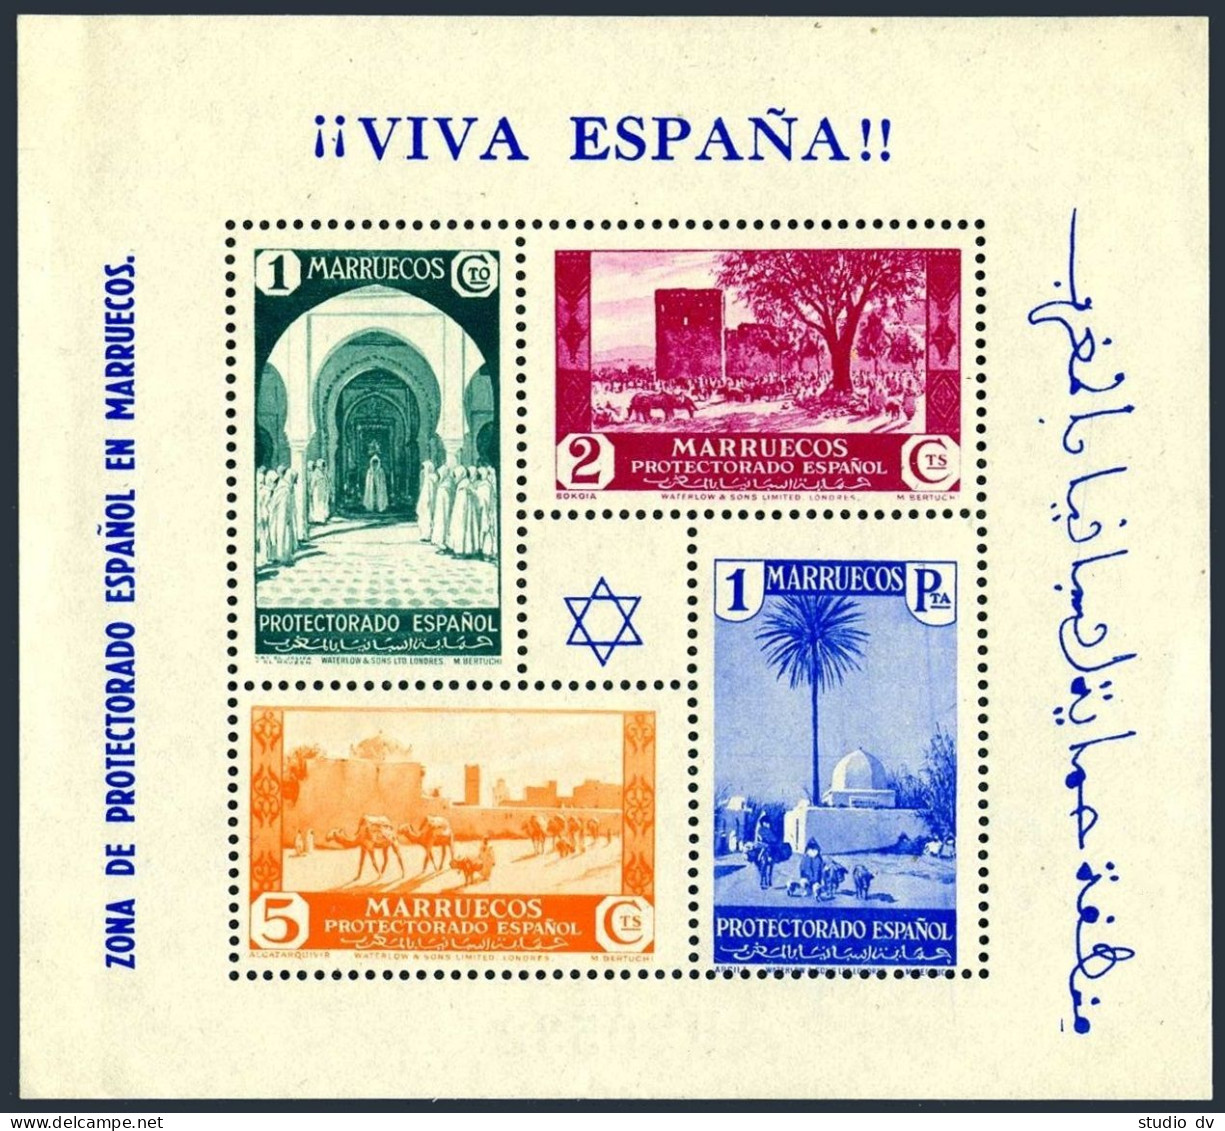 Spanish Morocco 174a Sheet, MNH. Mi Bl.2. Viva Espana,1937.Views,Bokola,Caravan, - Marokko (1956-...)